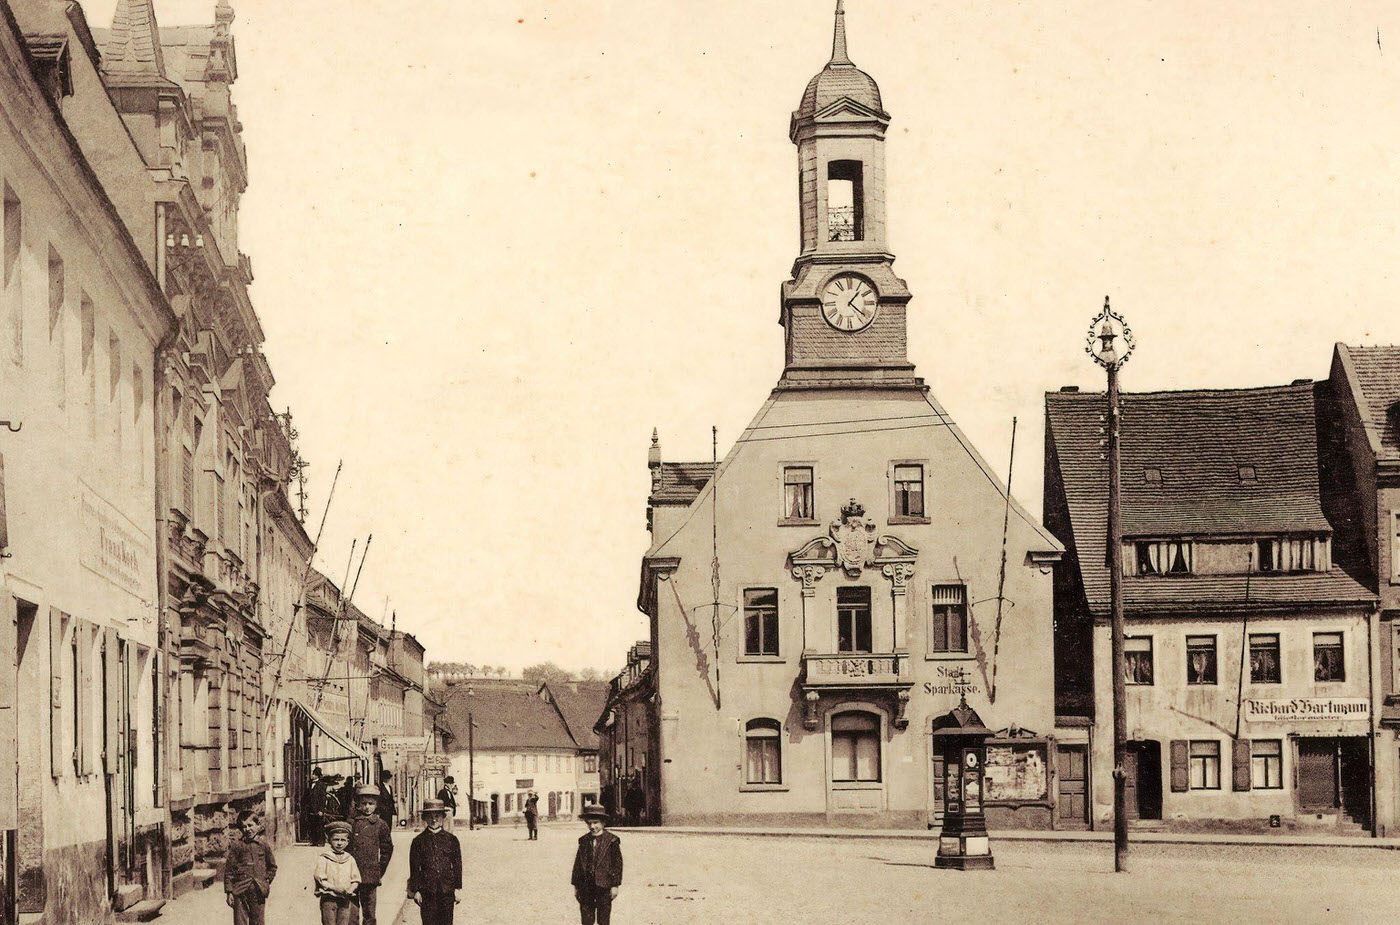 Town halls in Wilsdruff, Advertising columns, 1900s, Germany.